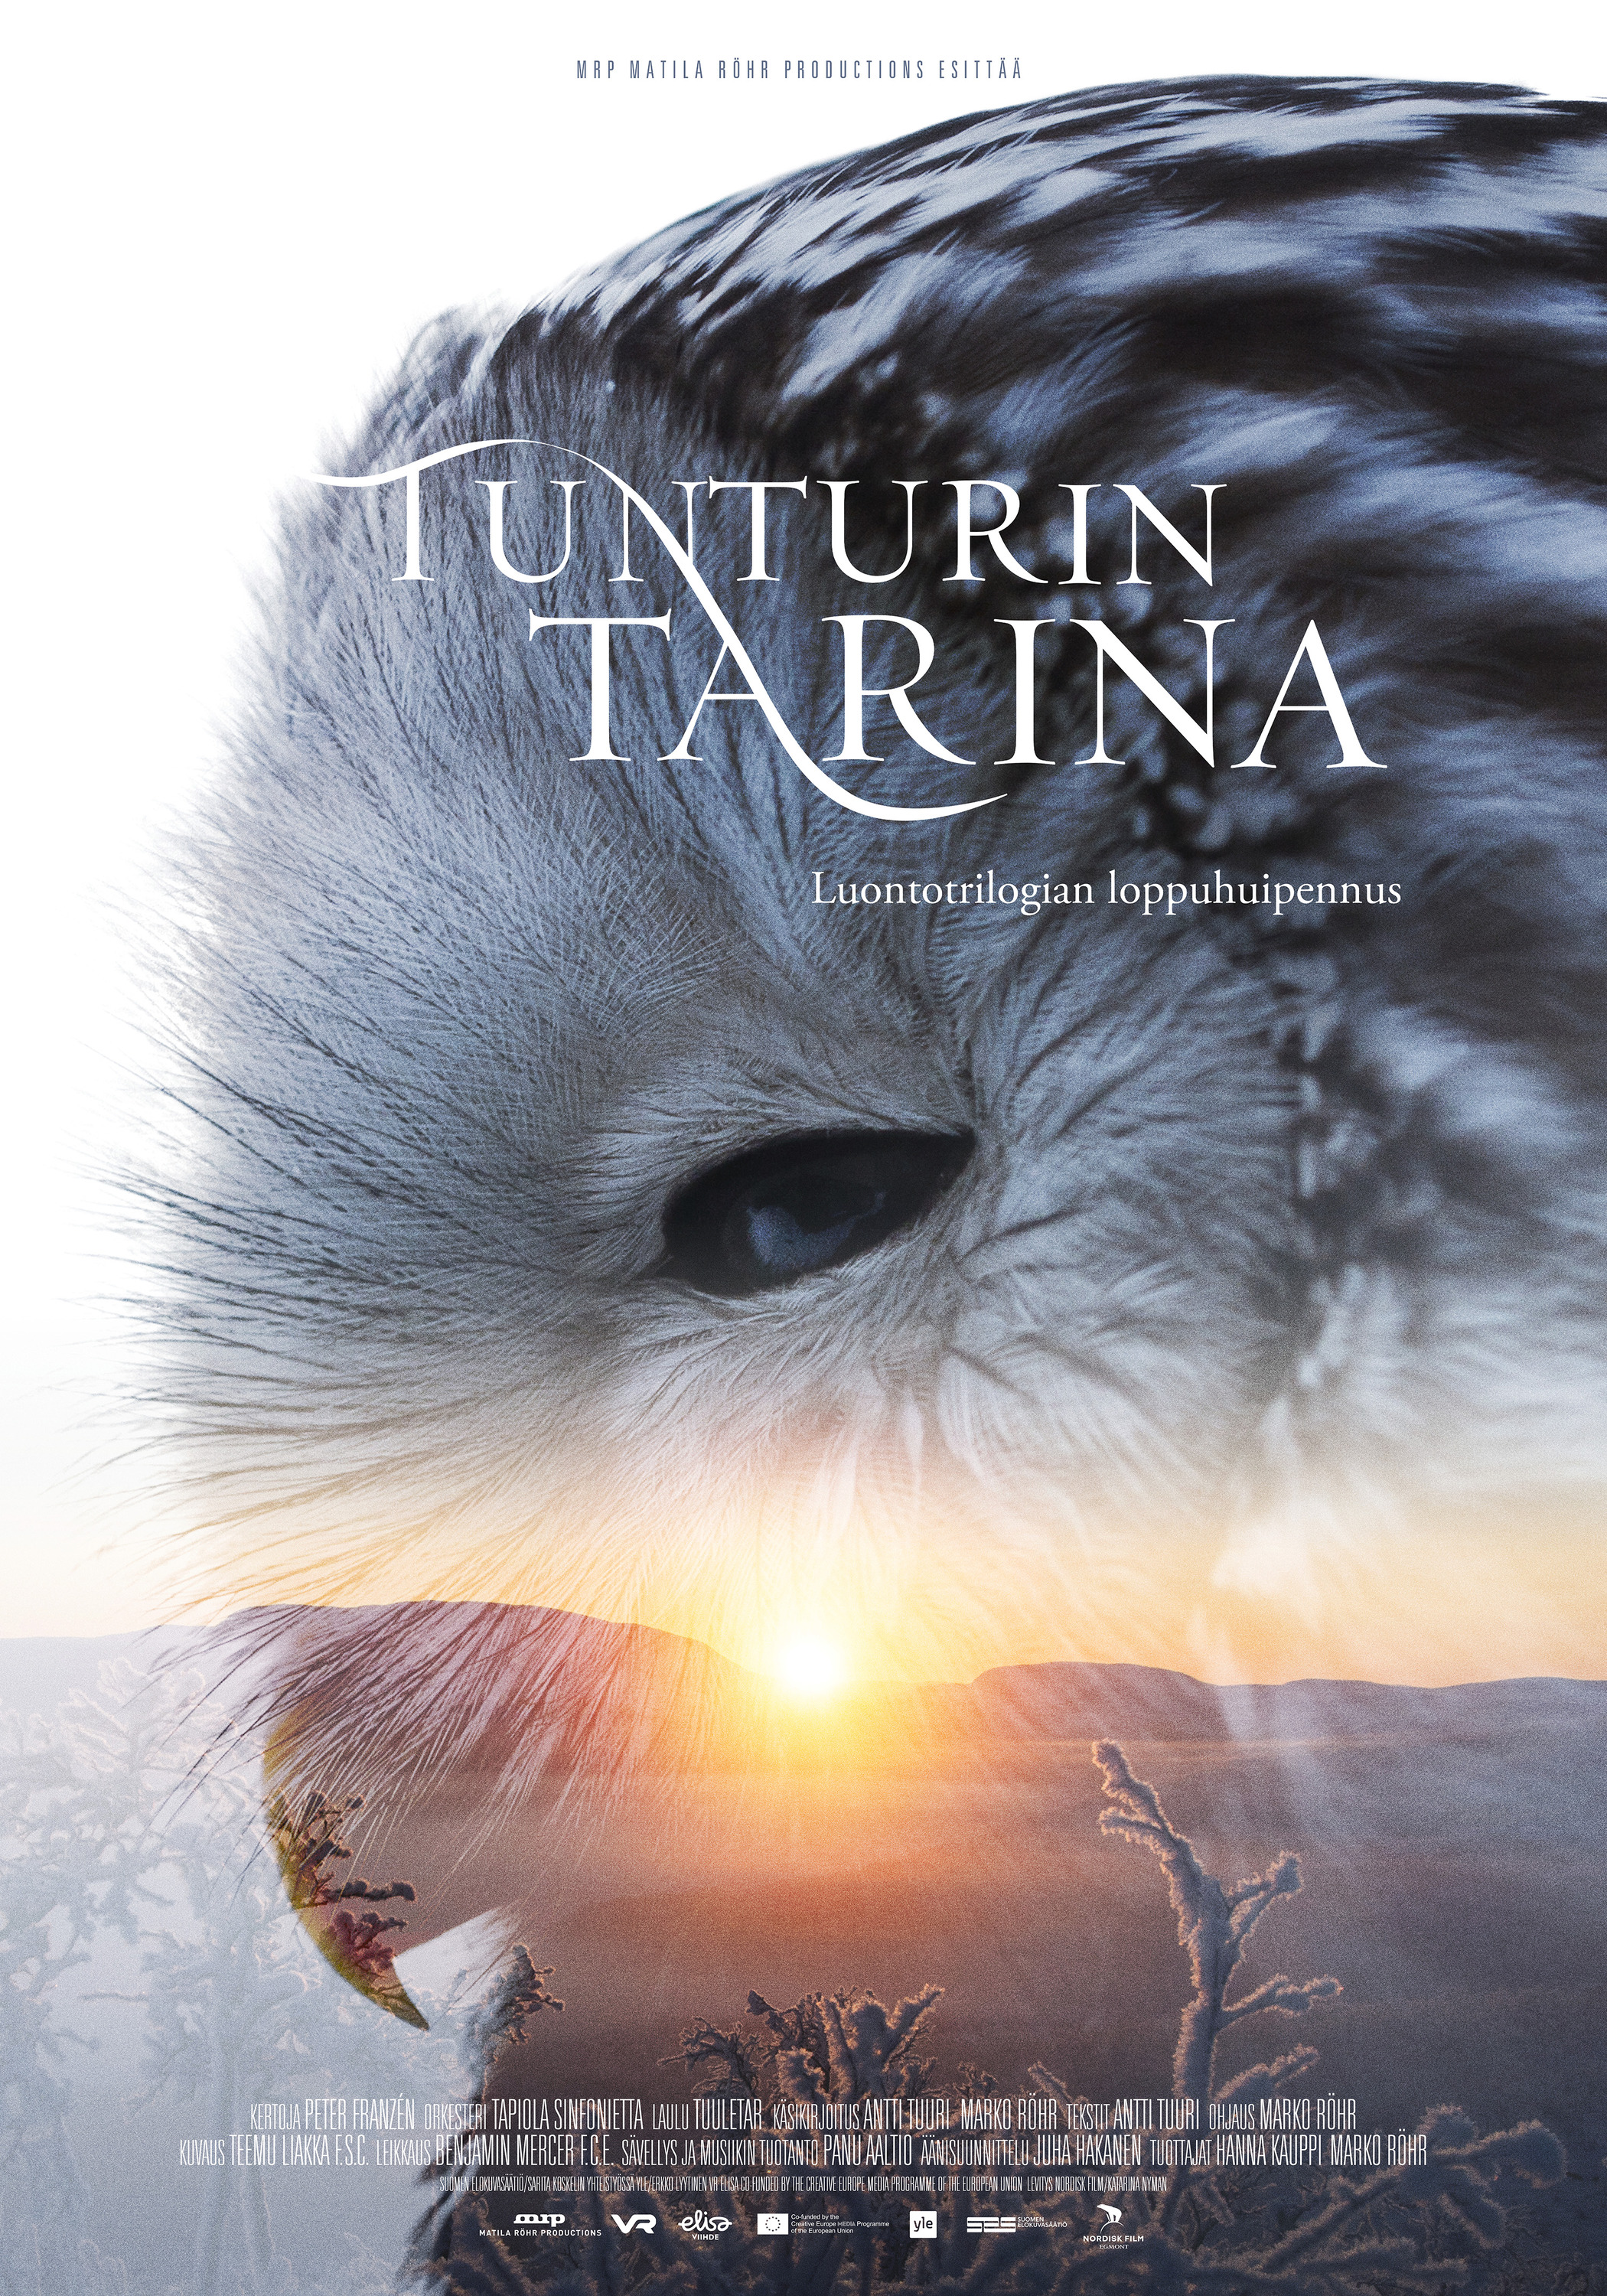 Mega Sized Movie Poster Image for Tunturin tarina 